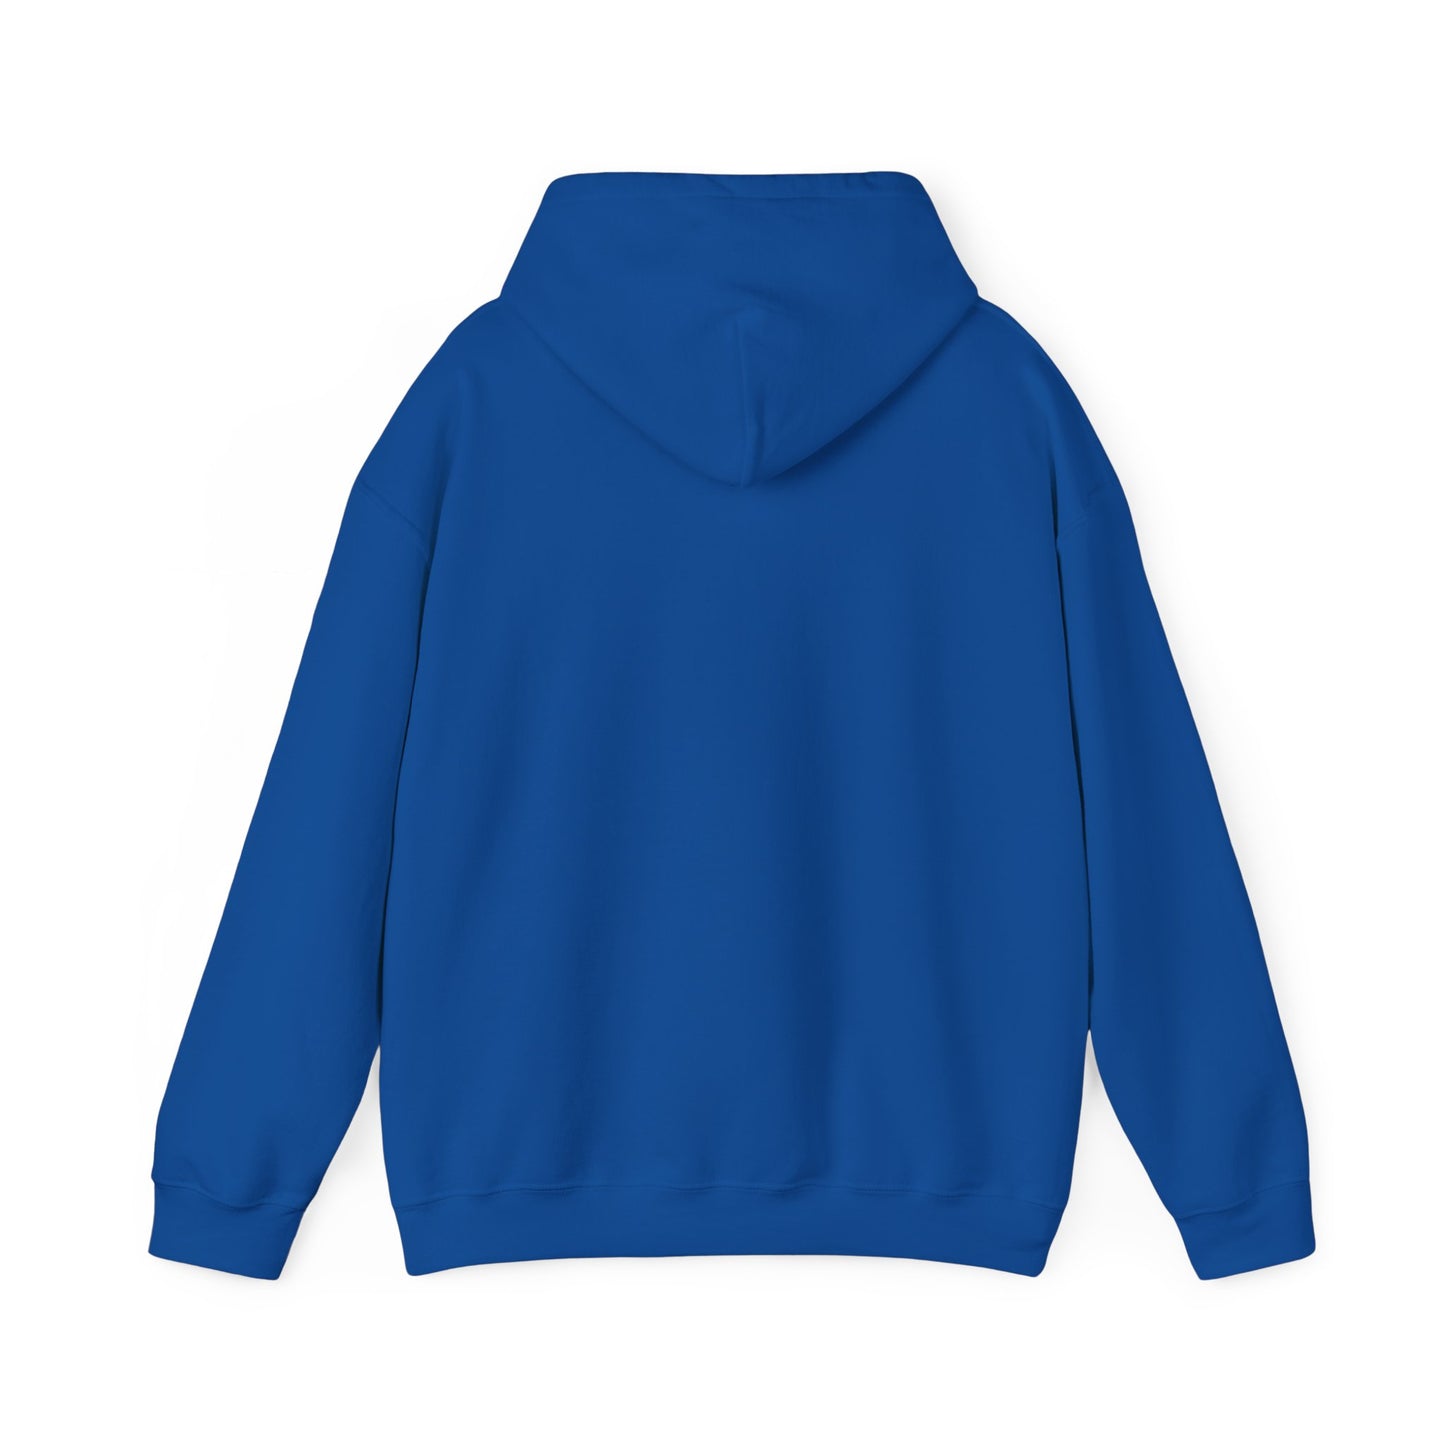 Beautiful Covered Girl - Unisex Heavy Blend Hooded Sweatshirt